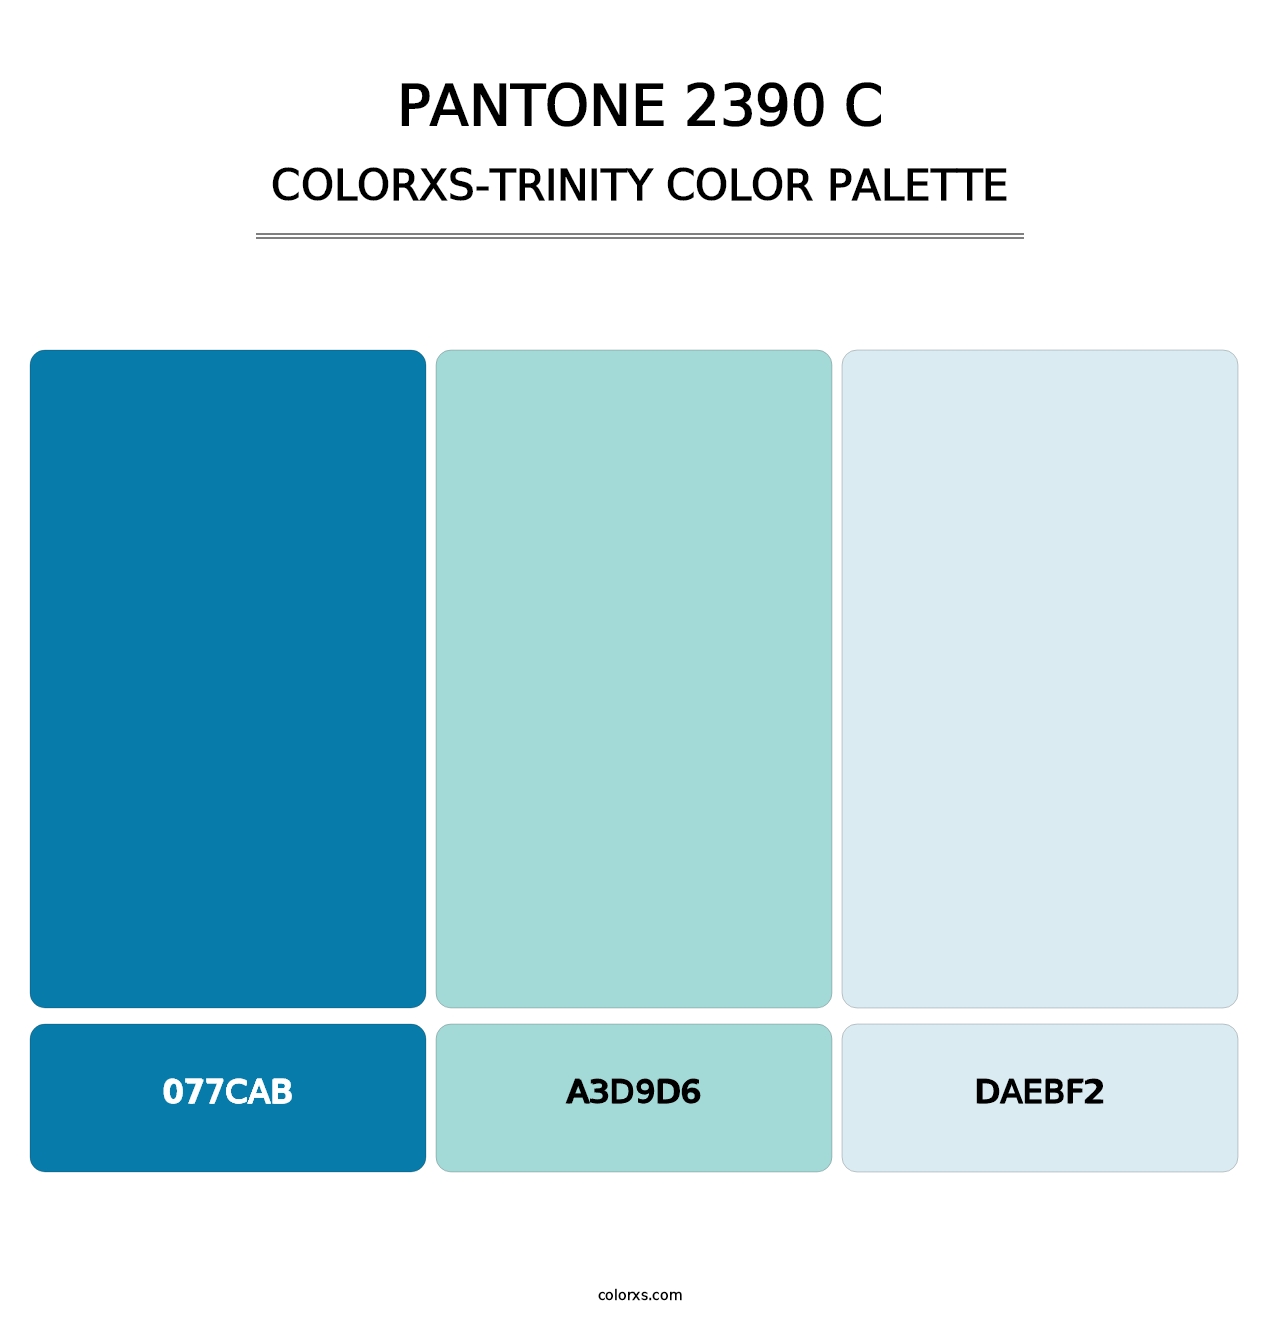 PANTONE 2390 C - Colorxs Trinity Palette